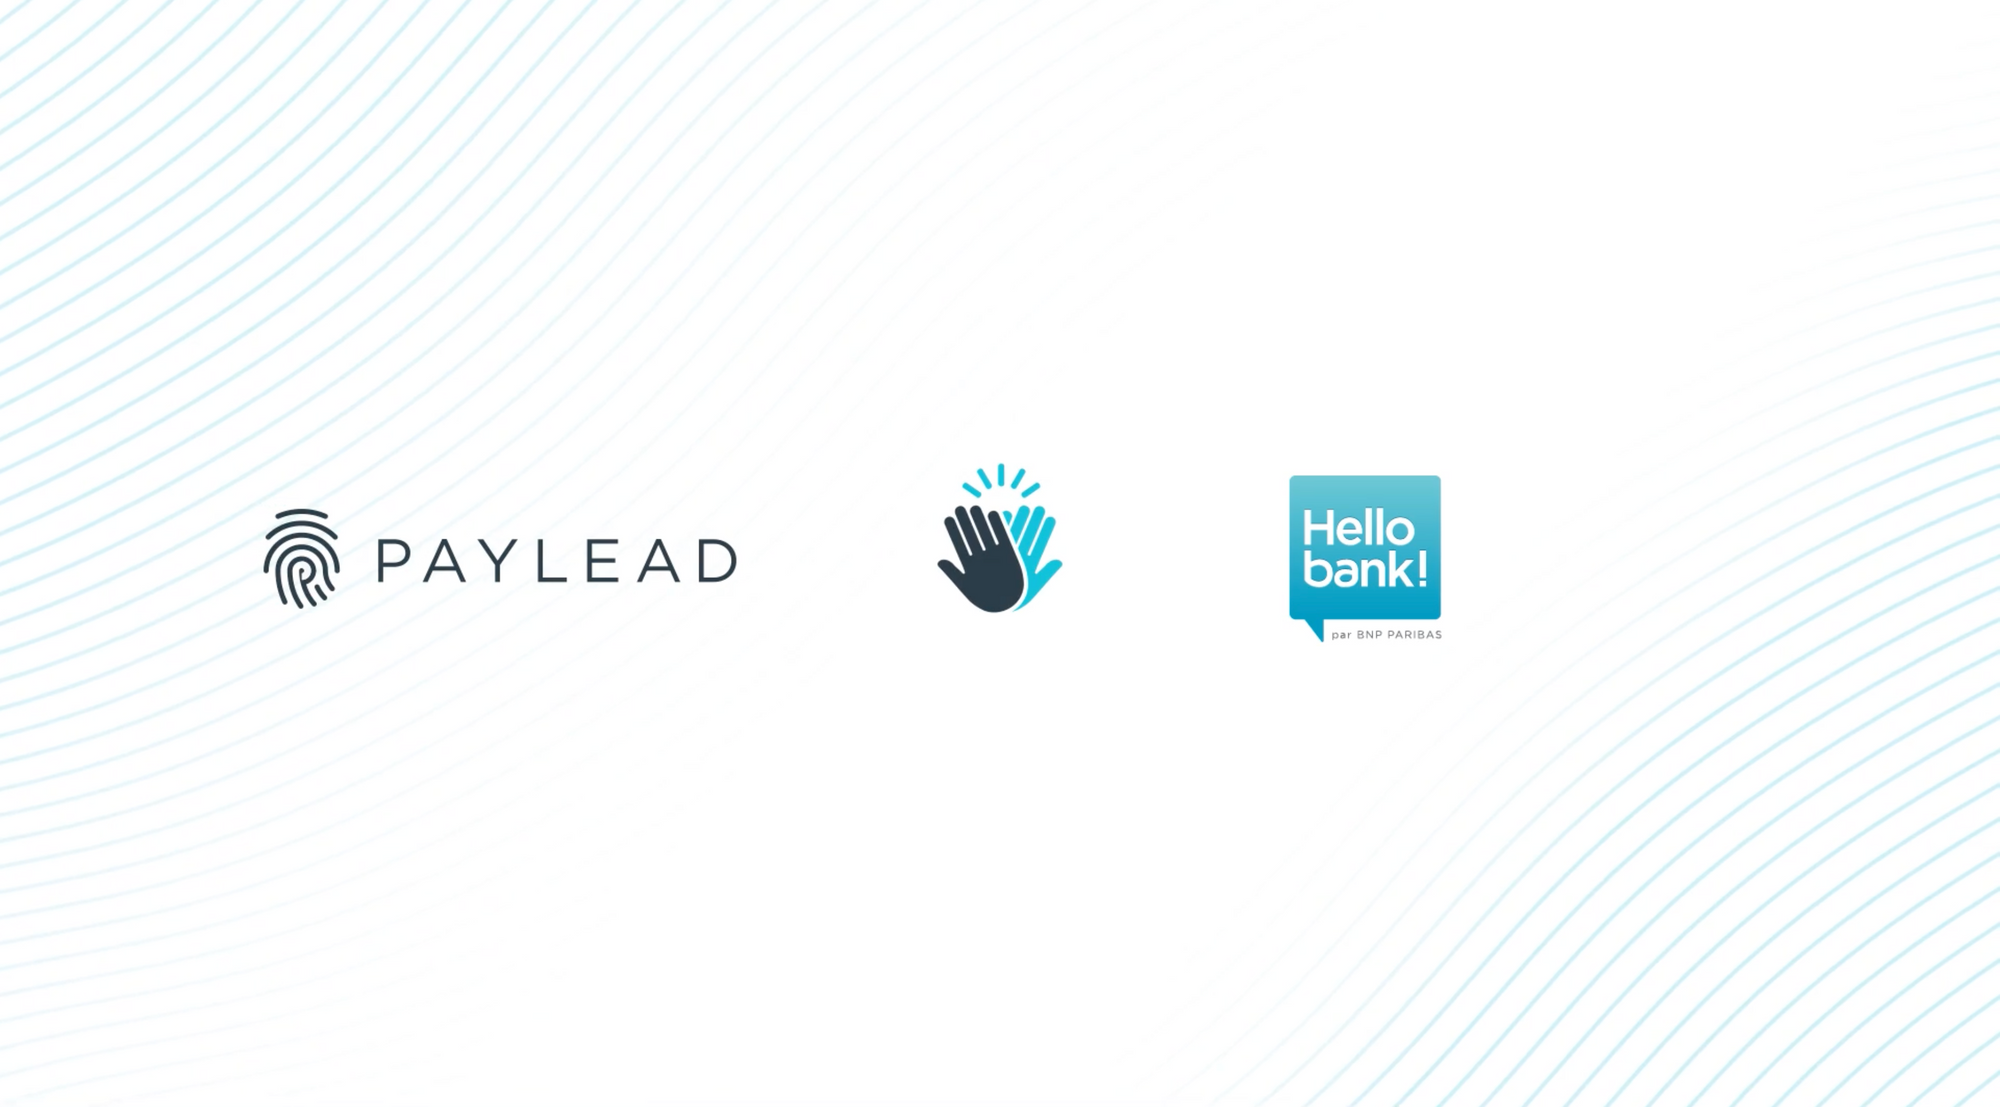 Hello bank! lance son programme de cashback automatique "Hello Extra" en partenariat avec PayLead